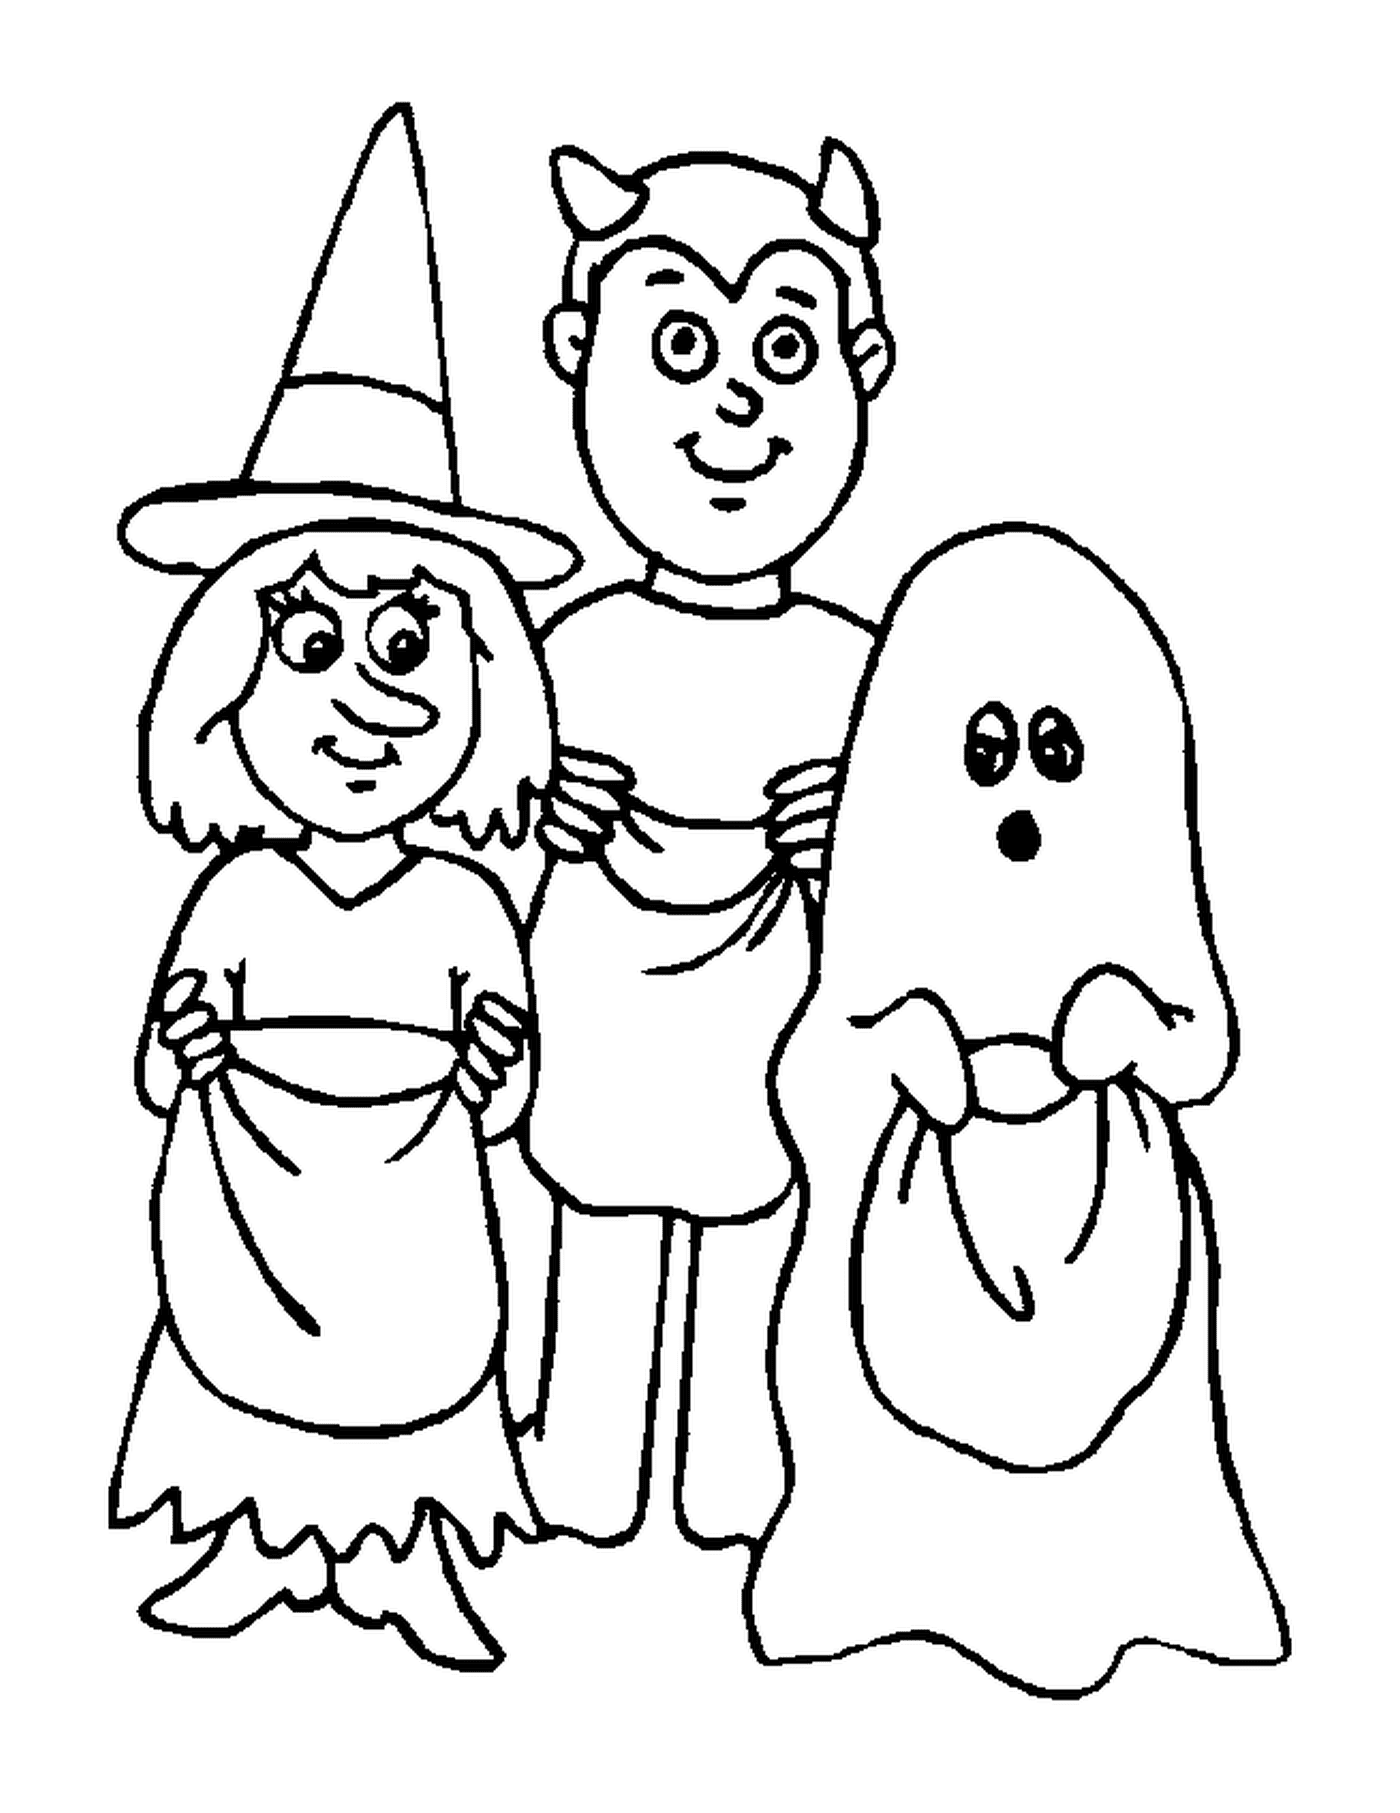  uomo, donna e fantasma travestiti per spaventare Halloween 